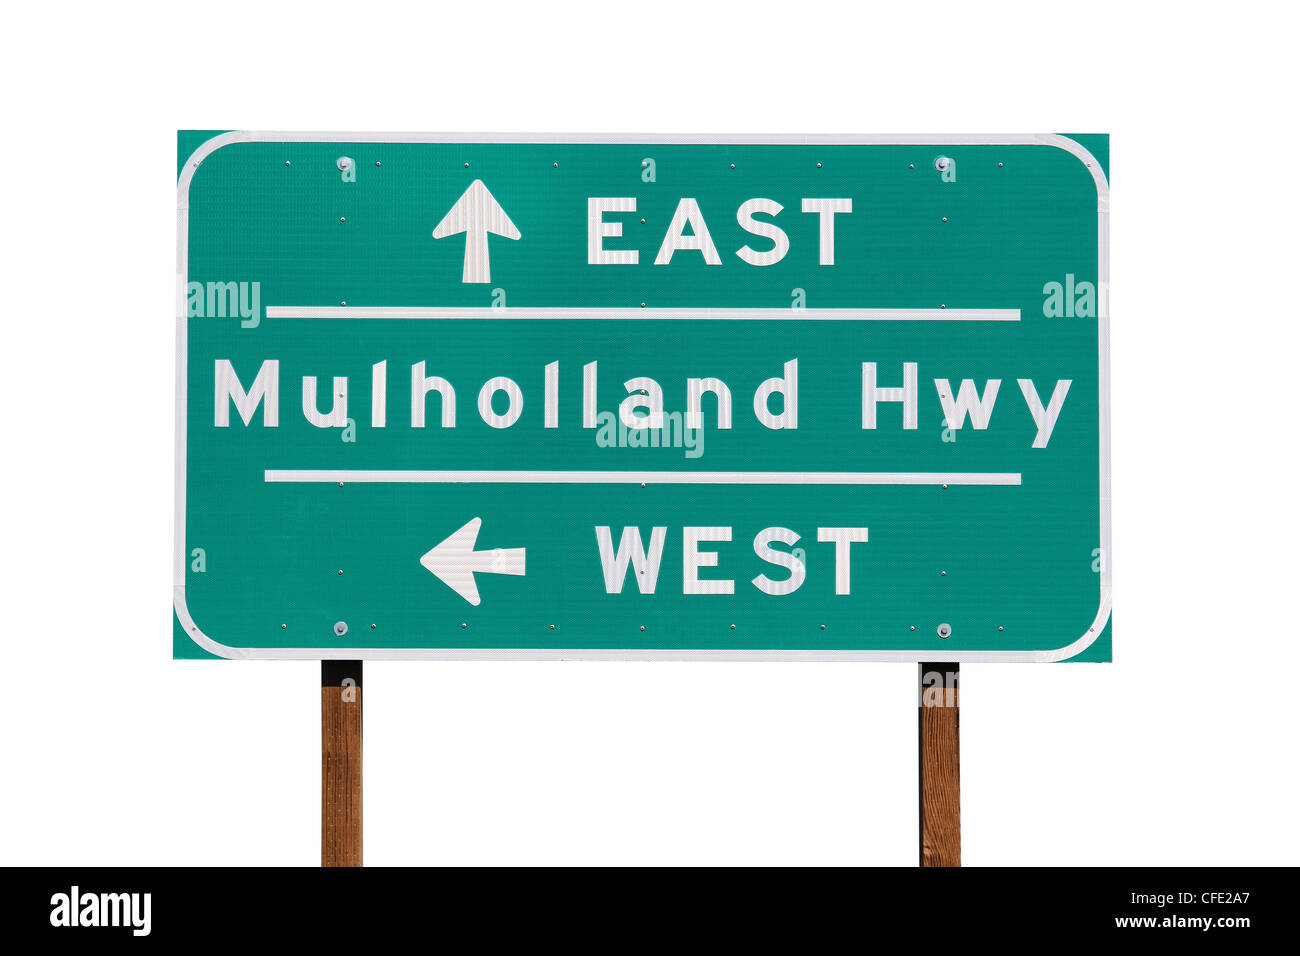 Mulholland Highway sign, près de Los Angeles en Californie. Banque D'Images